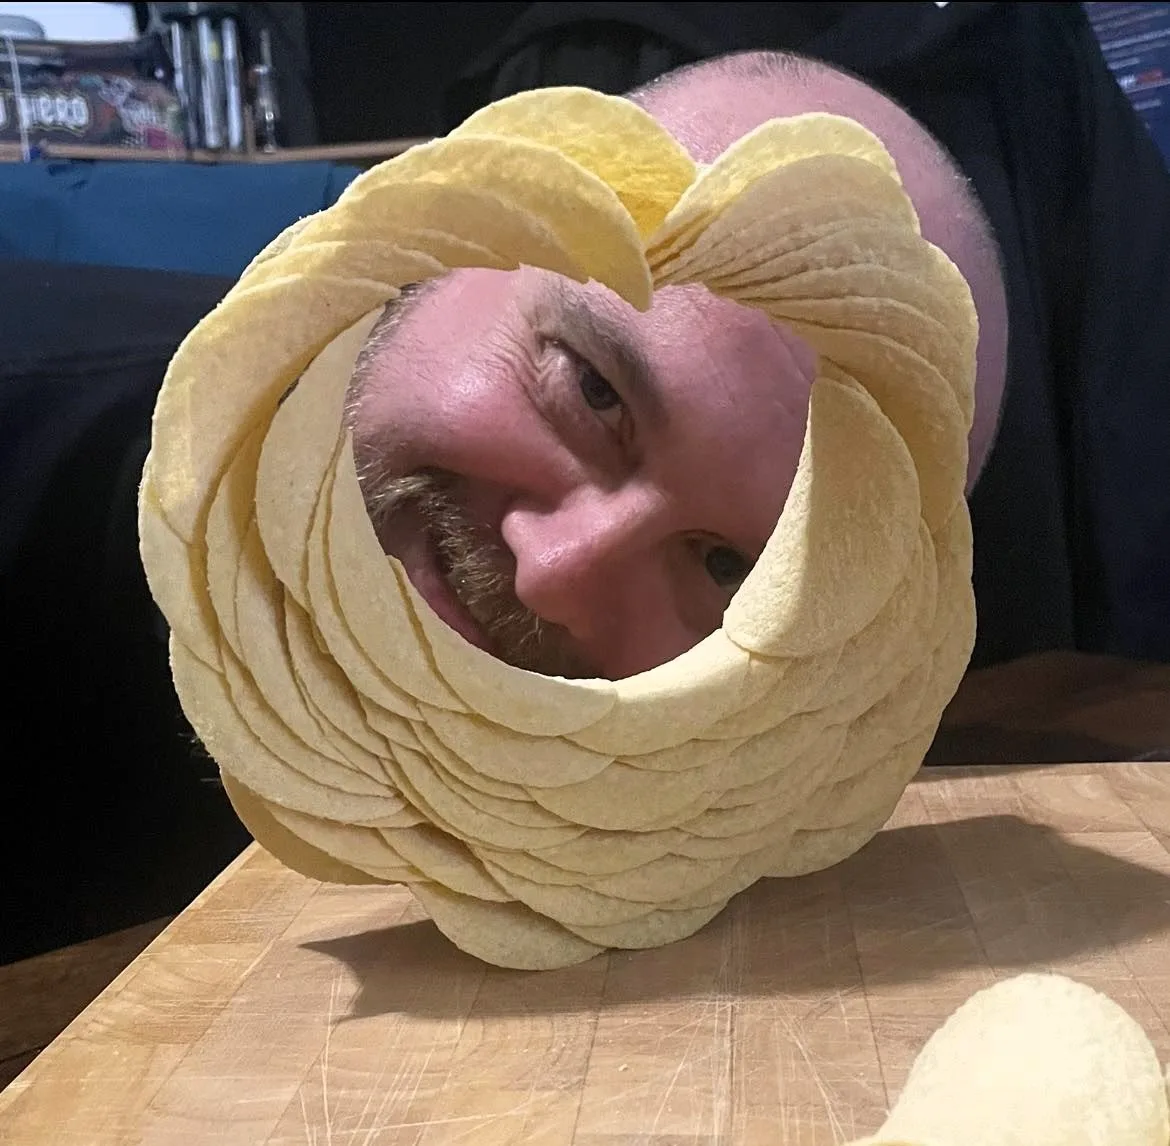 Andy’s crisp wheel, or Ringle, made from Pringles crisps leaves social media users stunned.